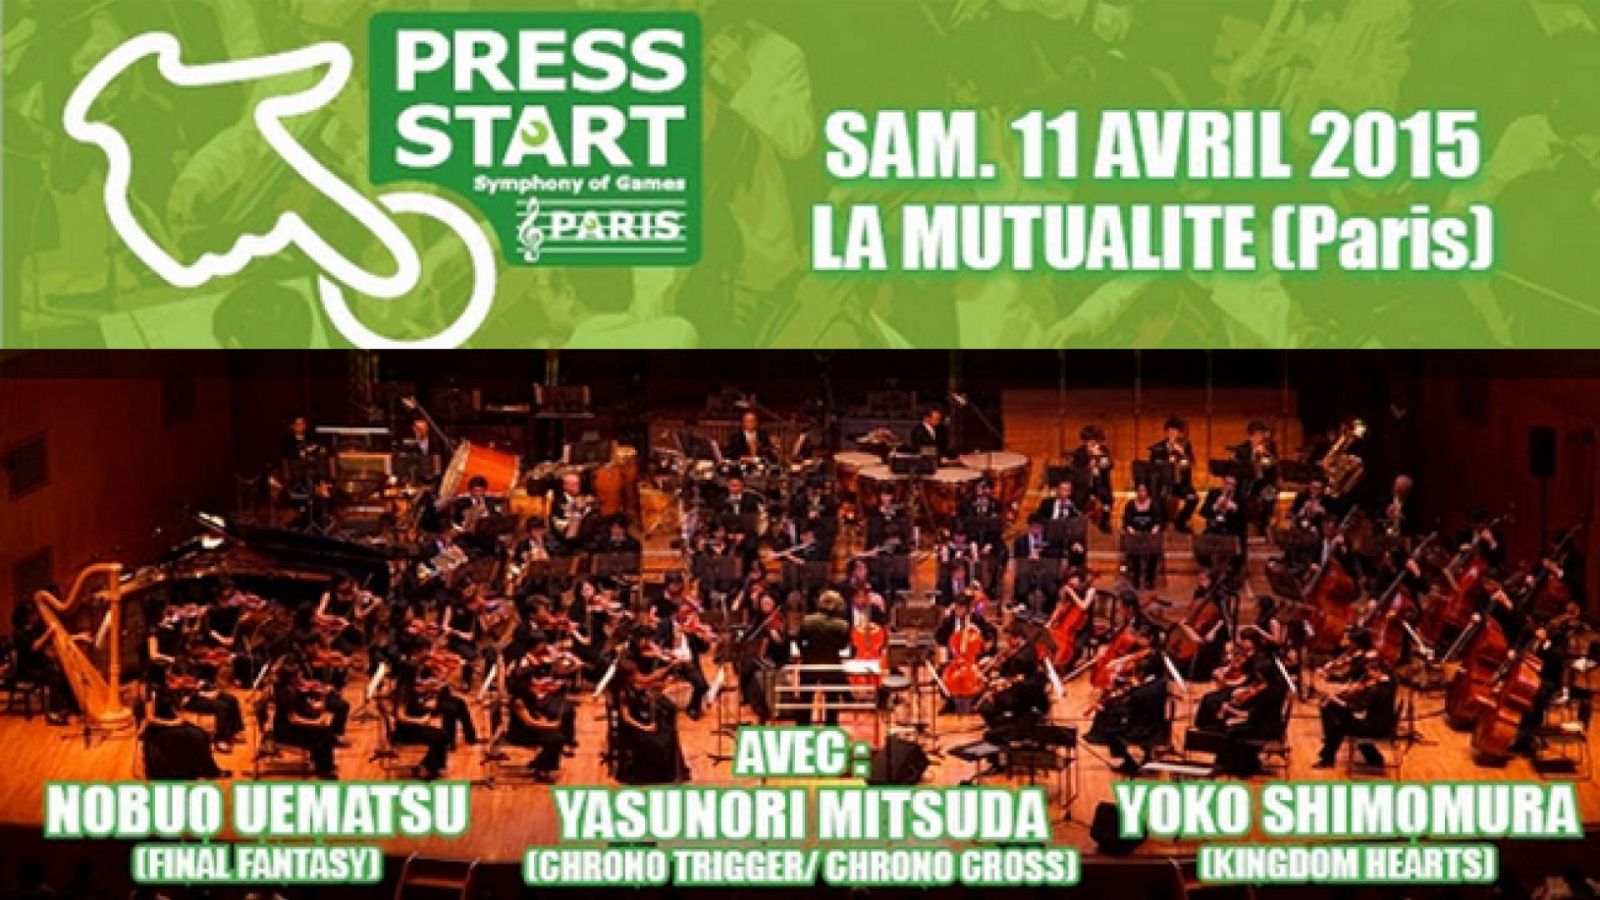 PRESS START - Symphony of Games à Paris © WildFaery